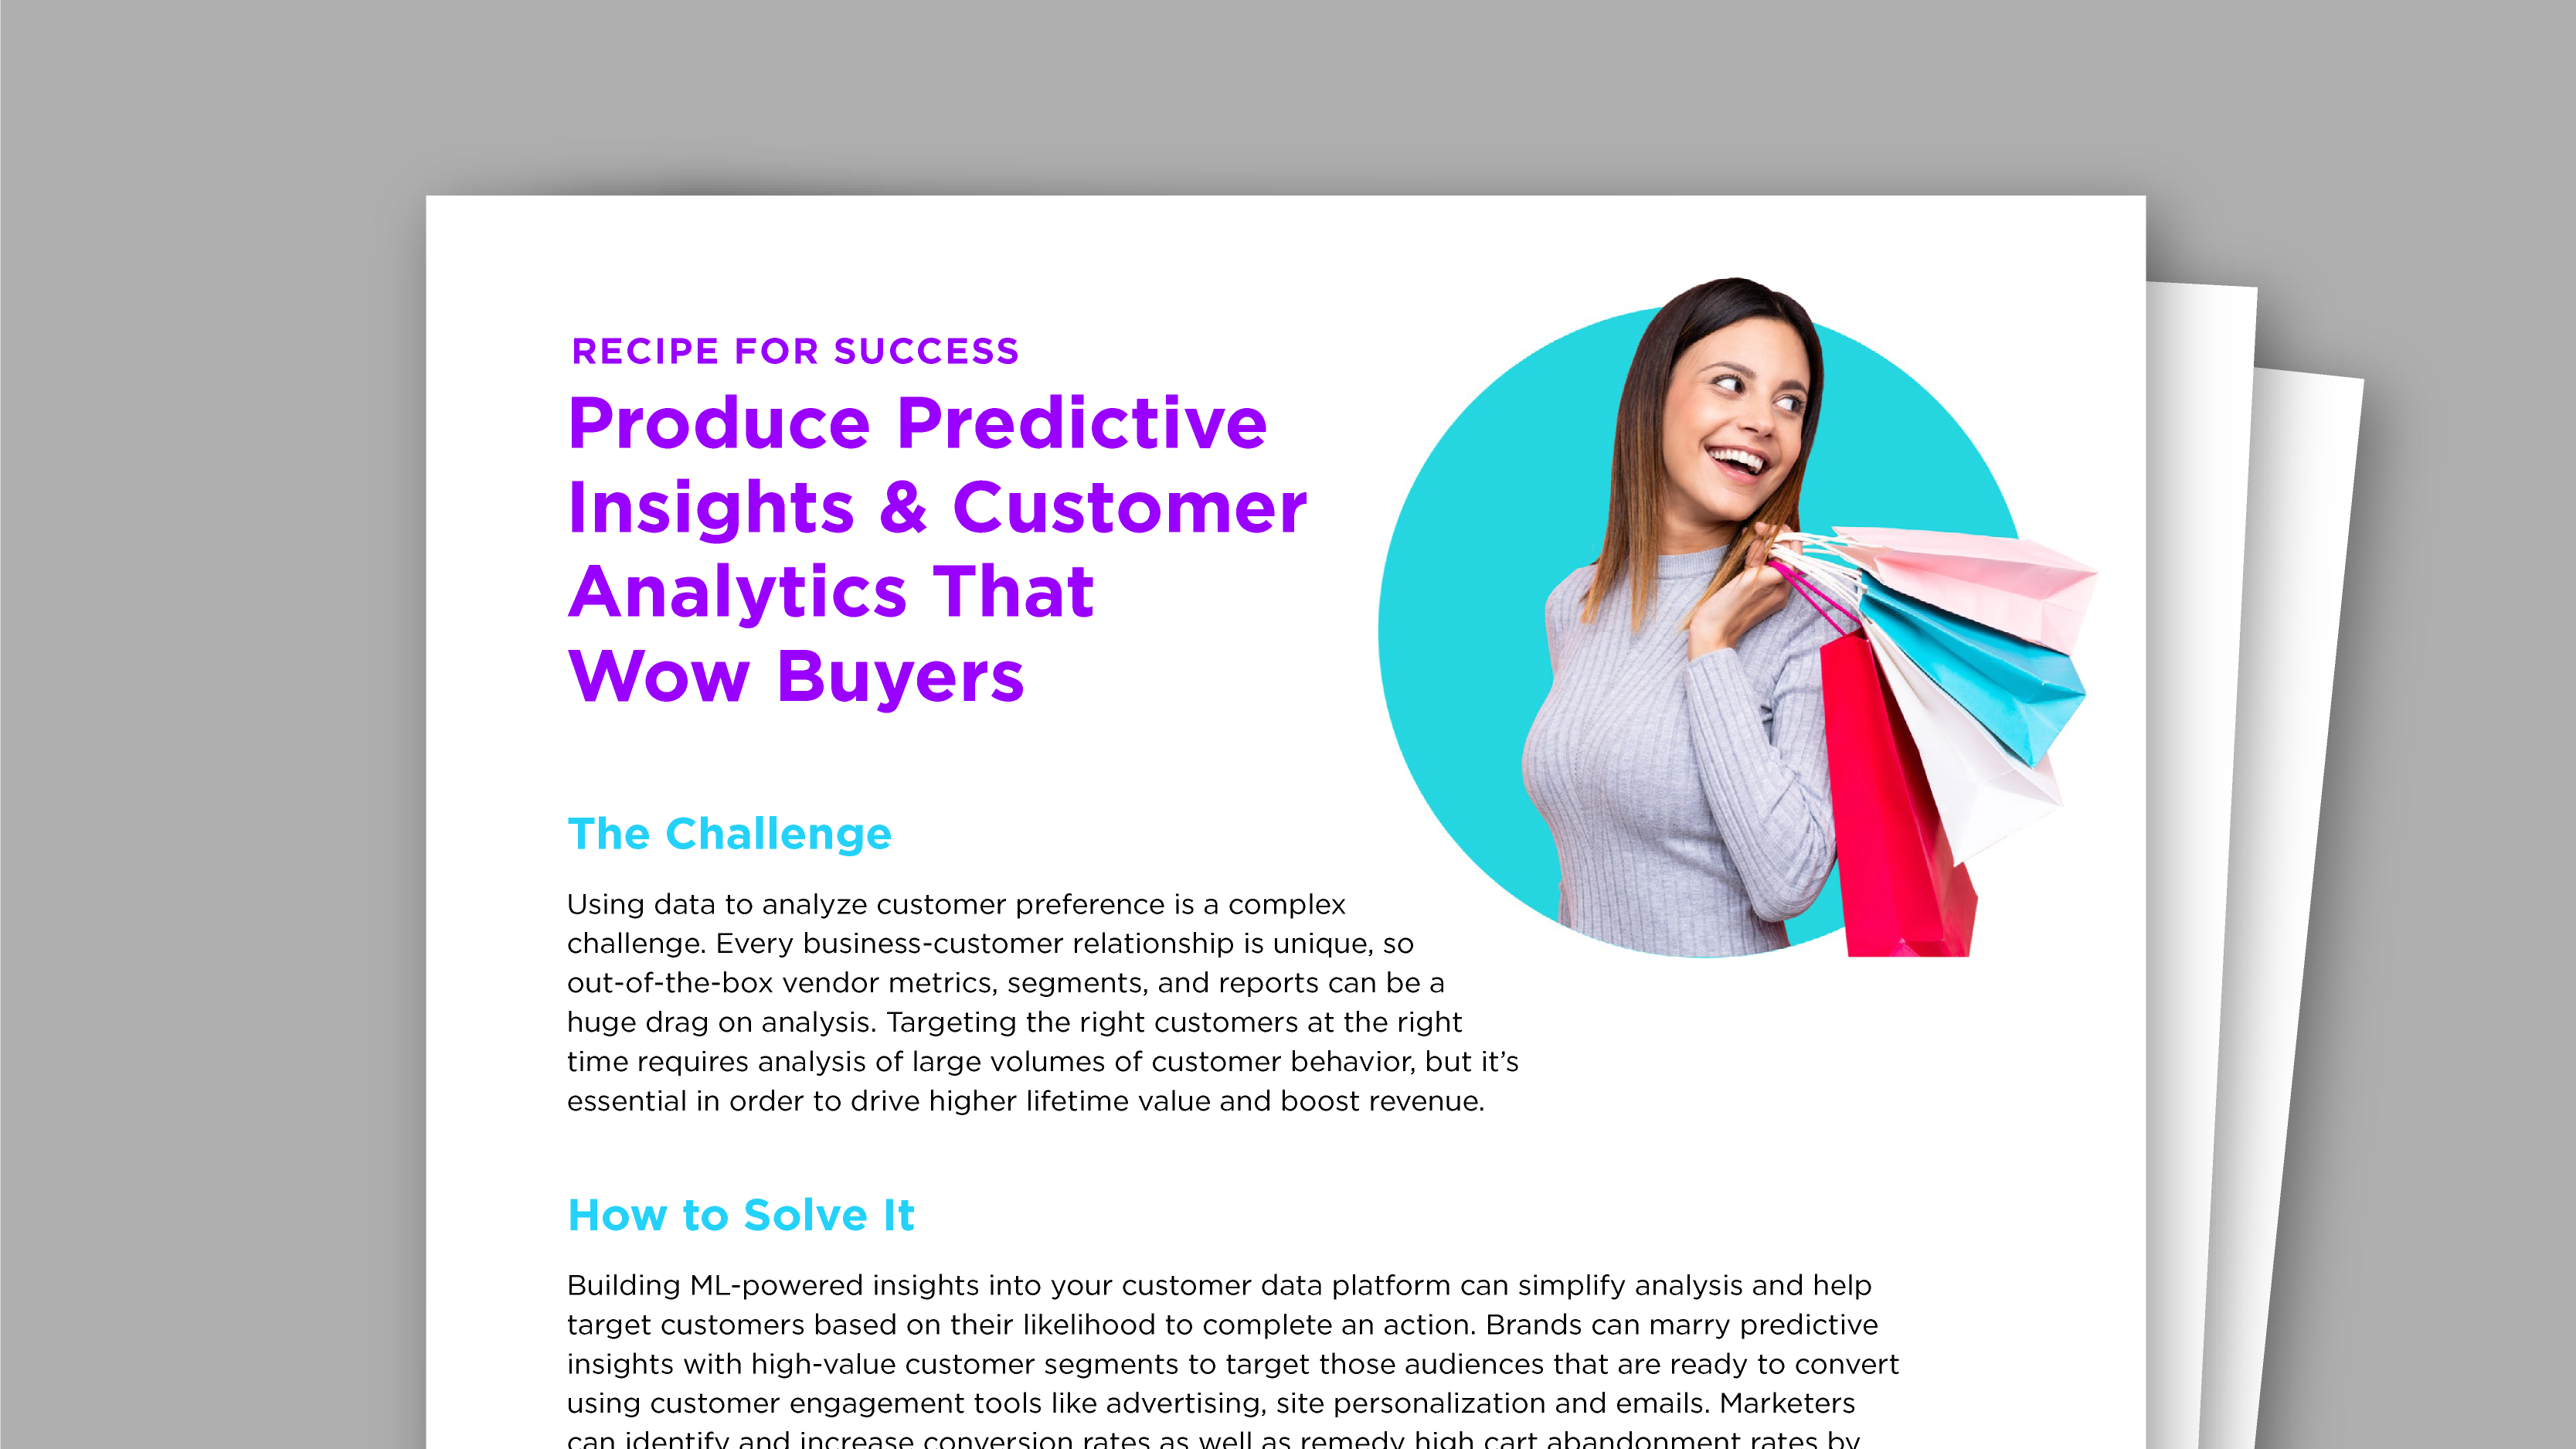 Predictive insights and customer analytics